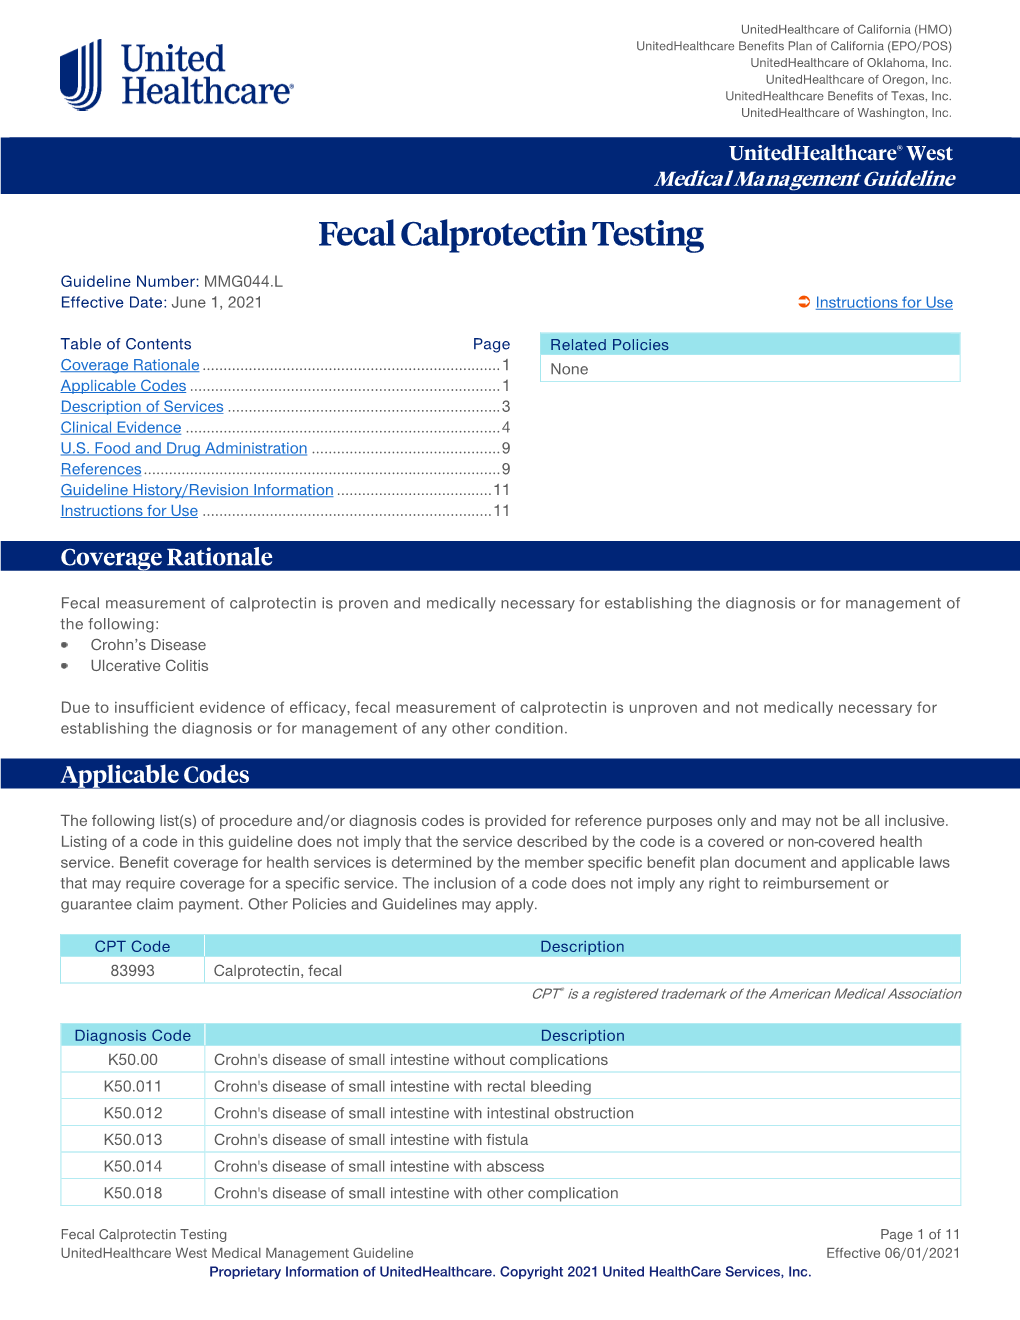 Fecal Calprotectin Testing – Unitedhealthcare West Medical